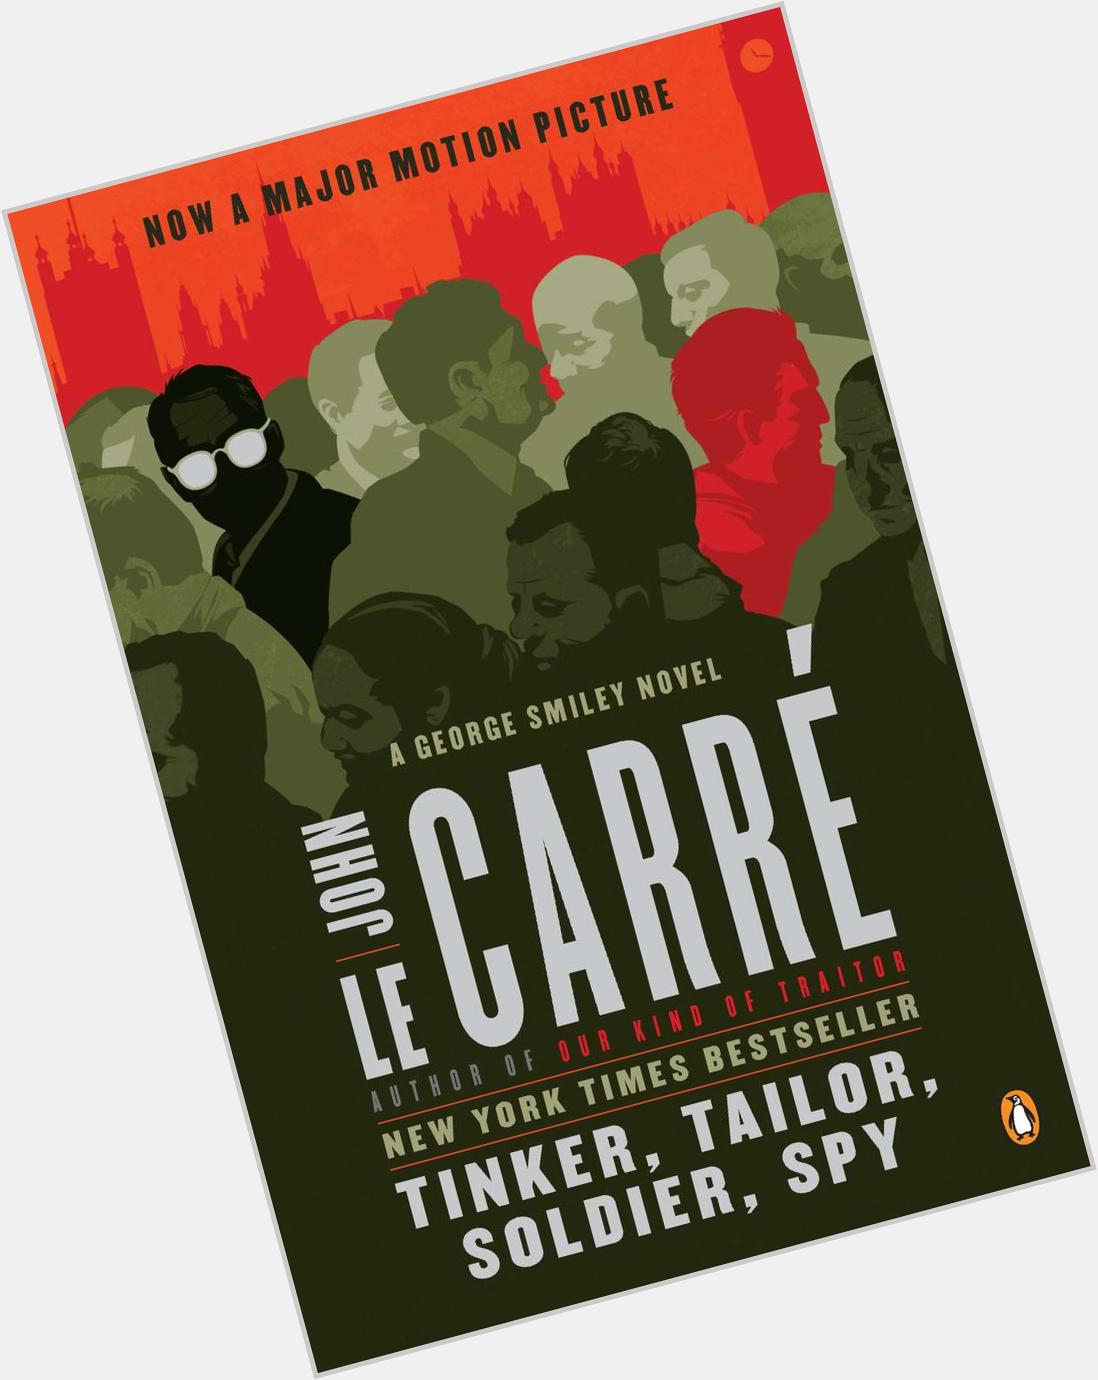  Happy birthday to UK novelist (& former MI6 member) John le Carré! 